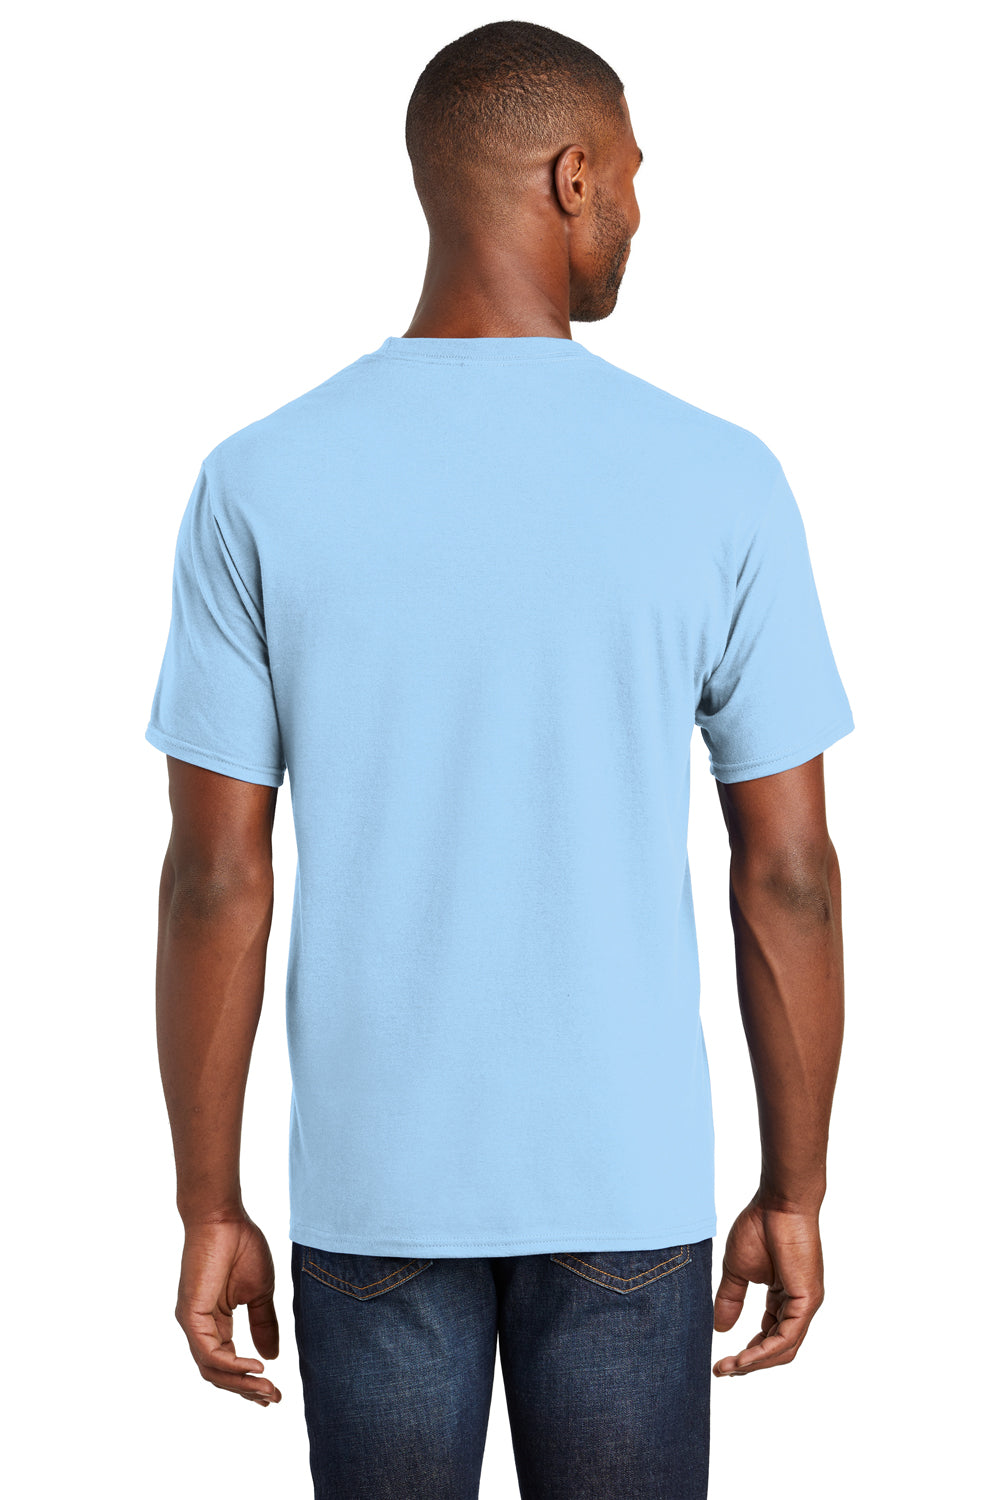 Port & Company PC450 Mens Fan Favorite Short Sleeve Crewneck T-Shirt Light Blue Back